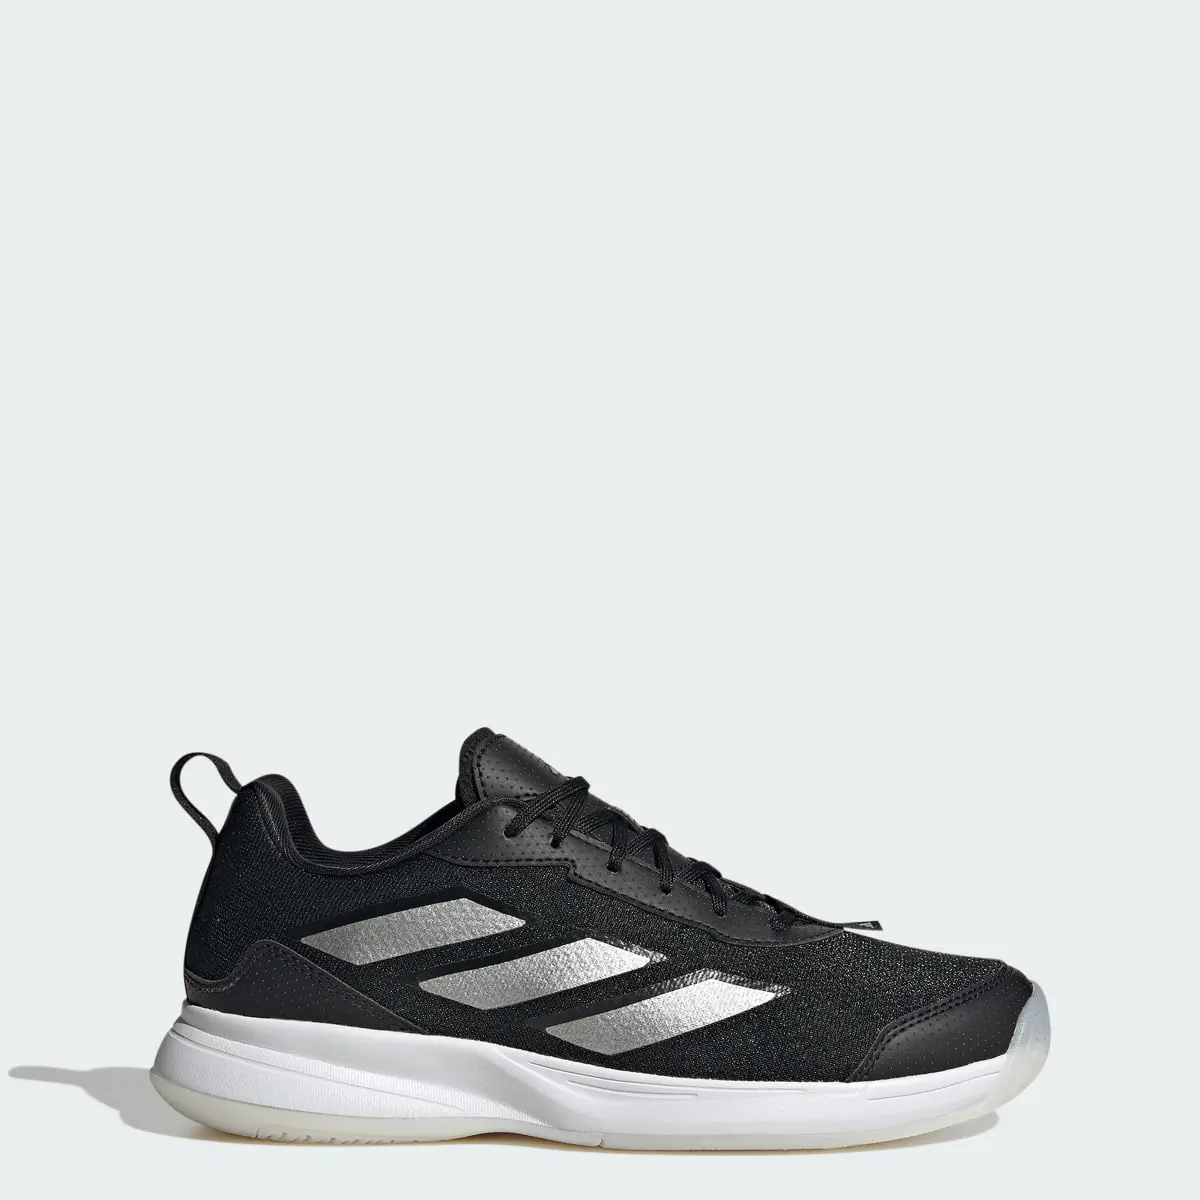 Adidas Avaflash Low Tennis Shoes. 1